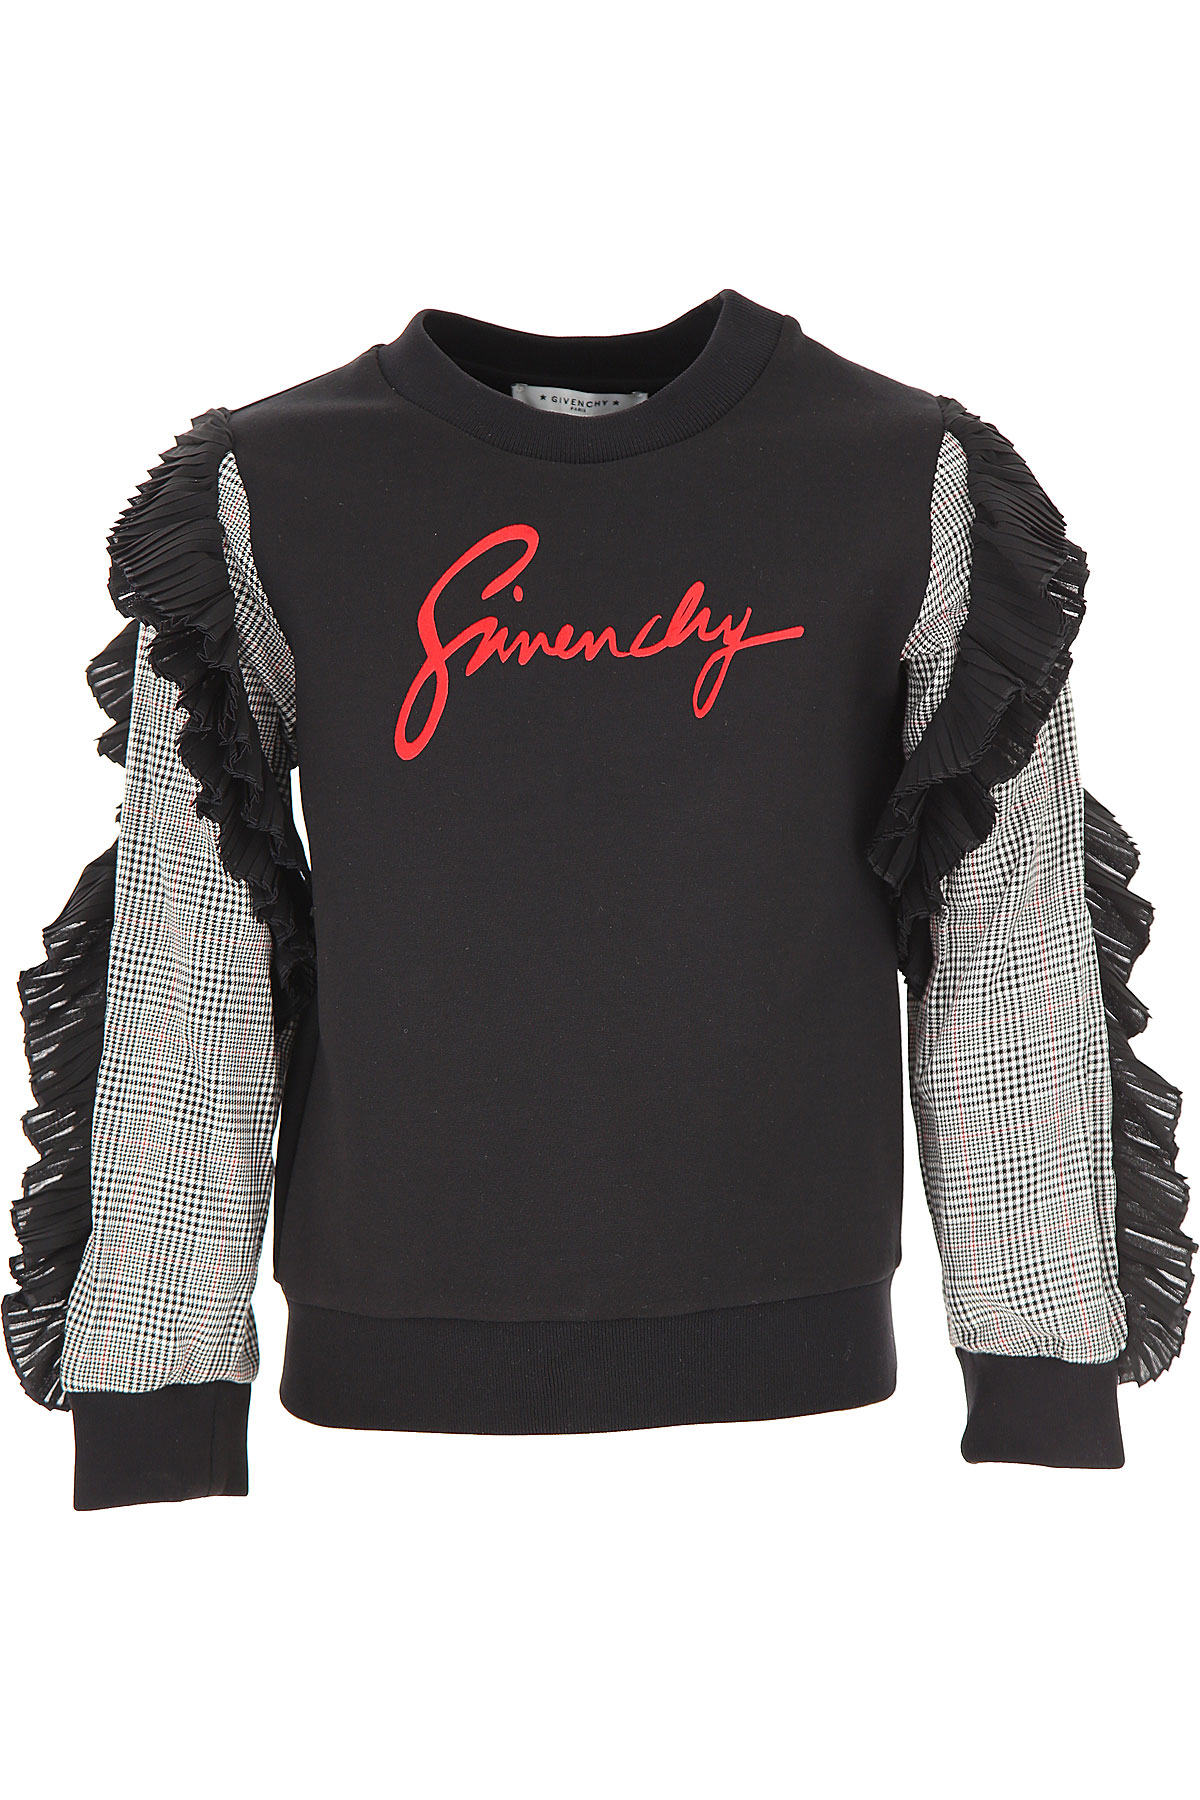 Givenchy Kinder Sweatshirt & Kapuzenpullover für Mädchen Günstig im Sale, Schwarz, Baumwolle, 2017, 10Y 12Y 14Y 4Y 6Y 8Y